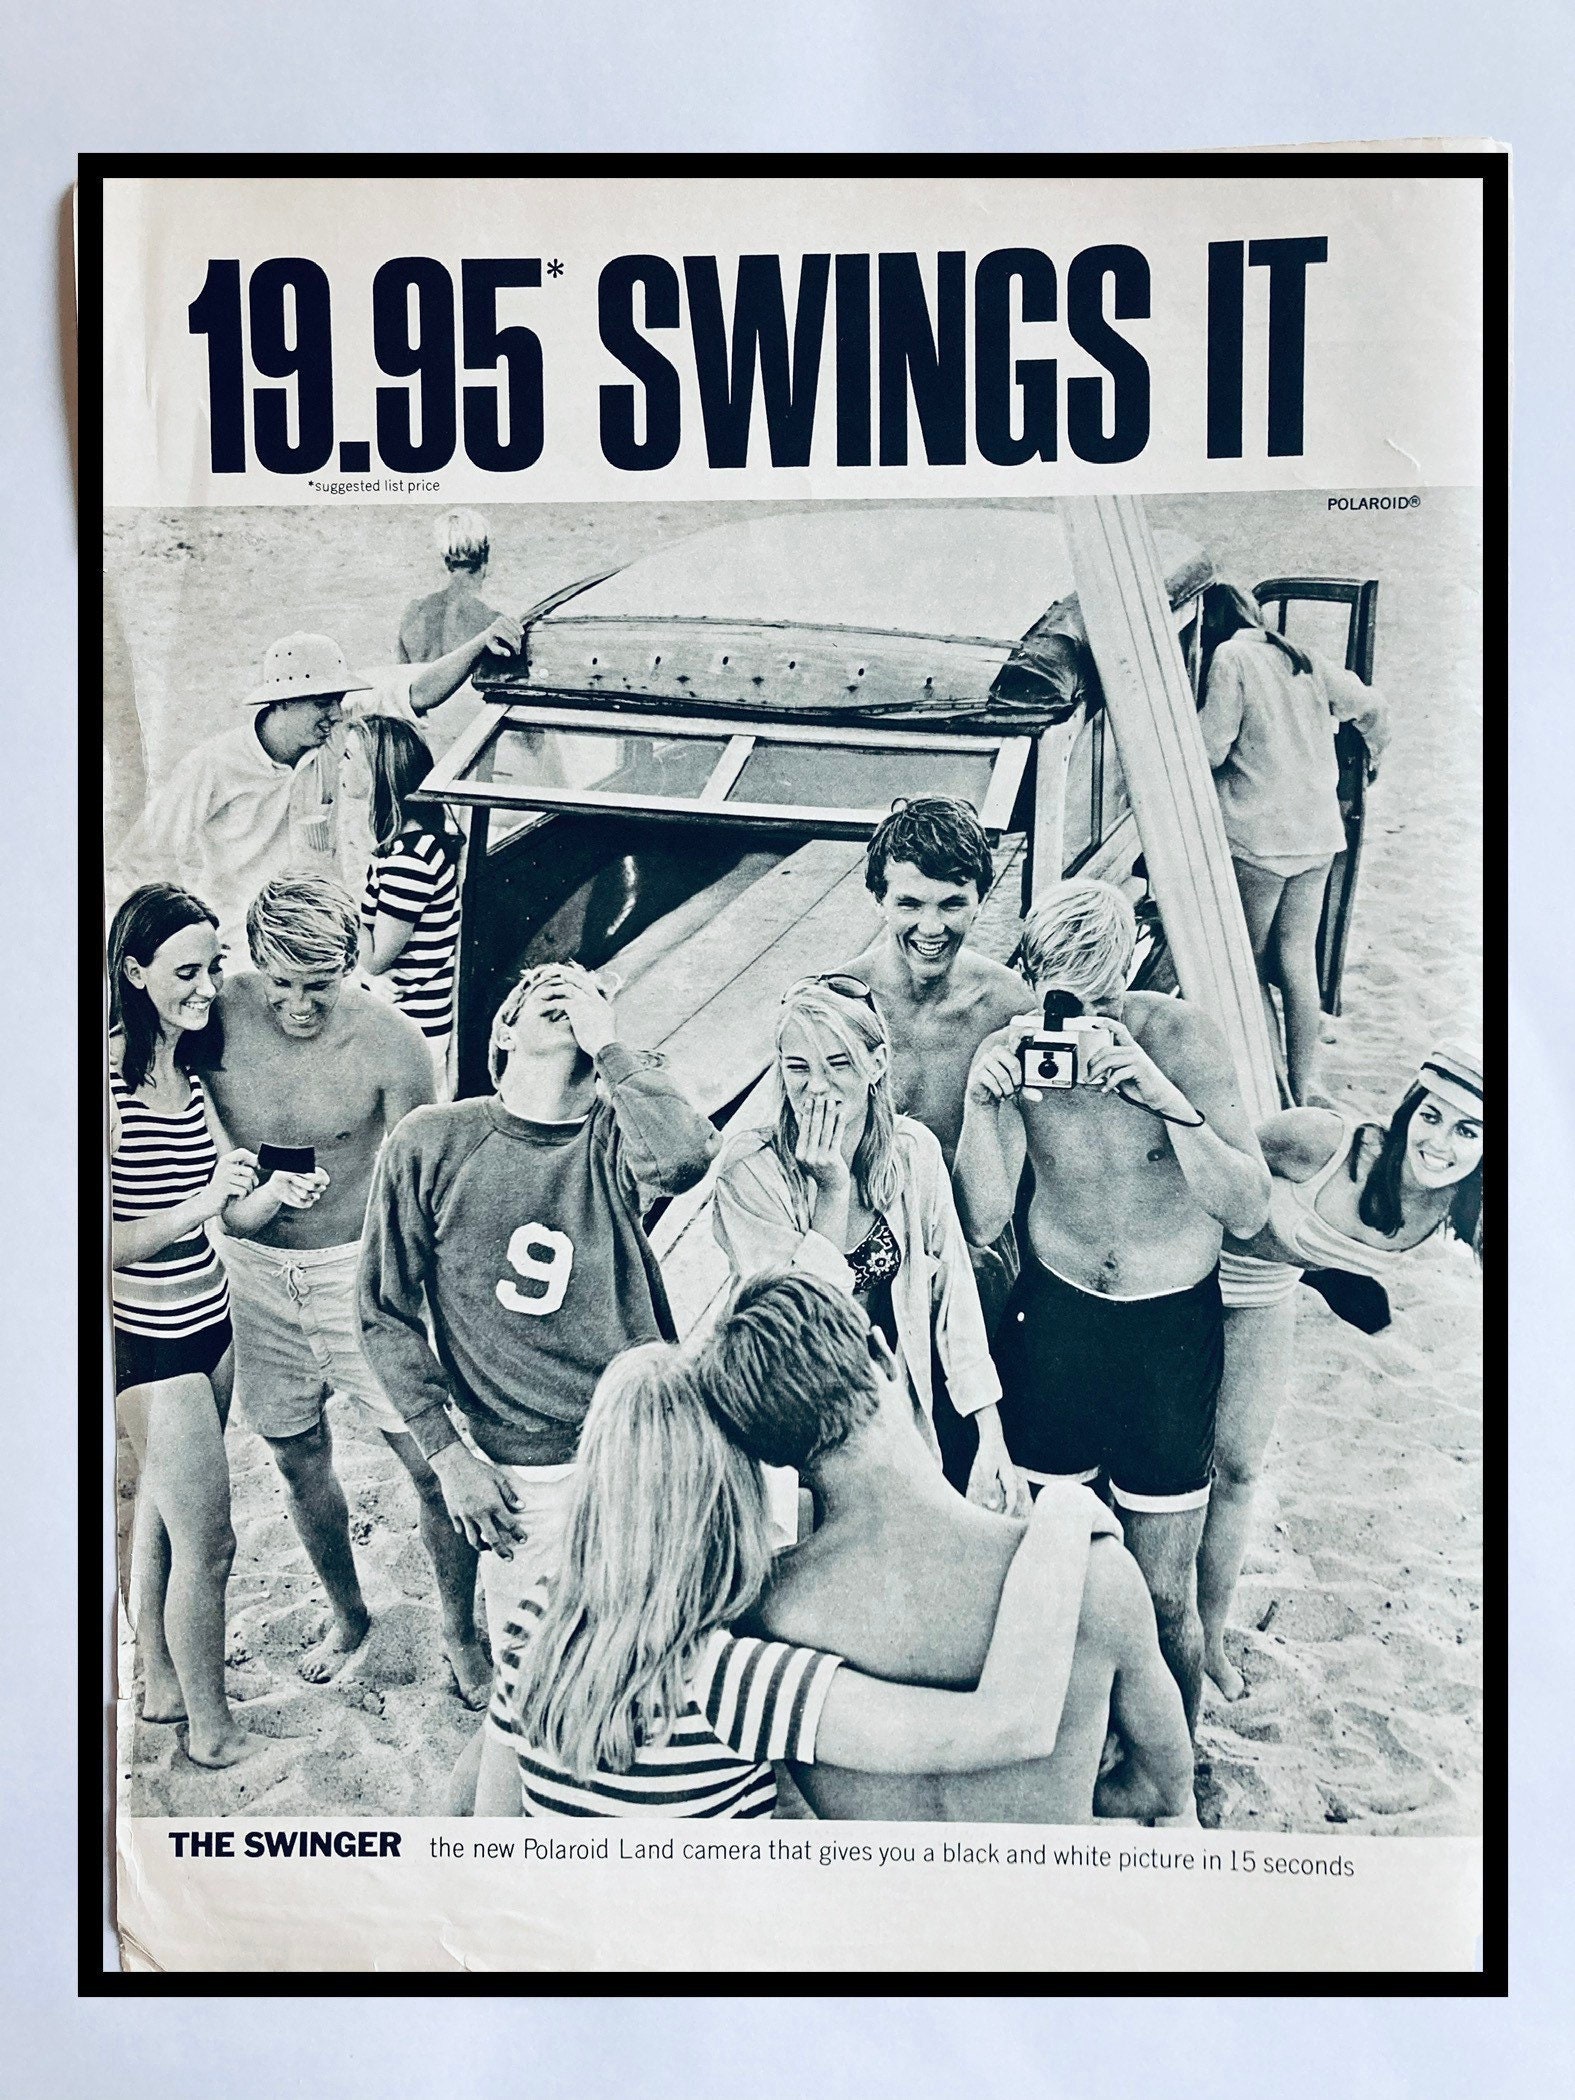 Vtg Polaroid Print Ad 1967 Swinger Camera 19.95 Swings It